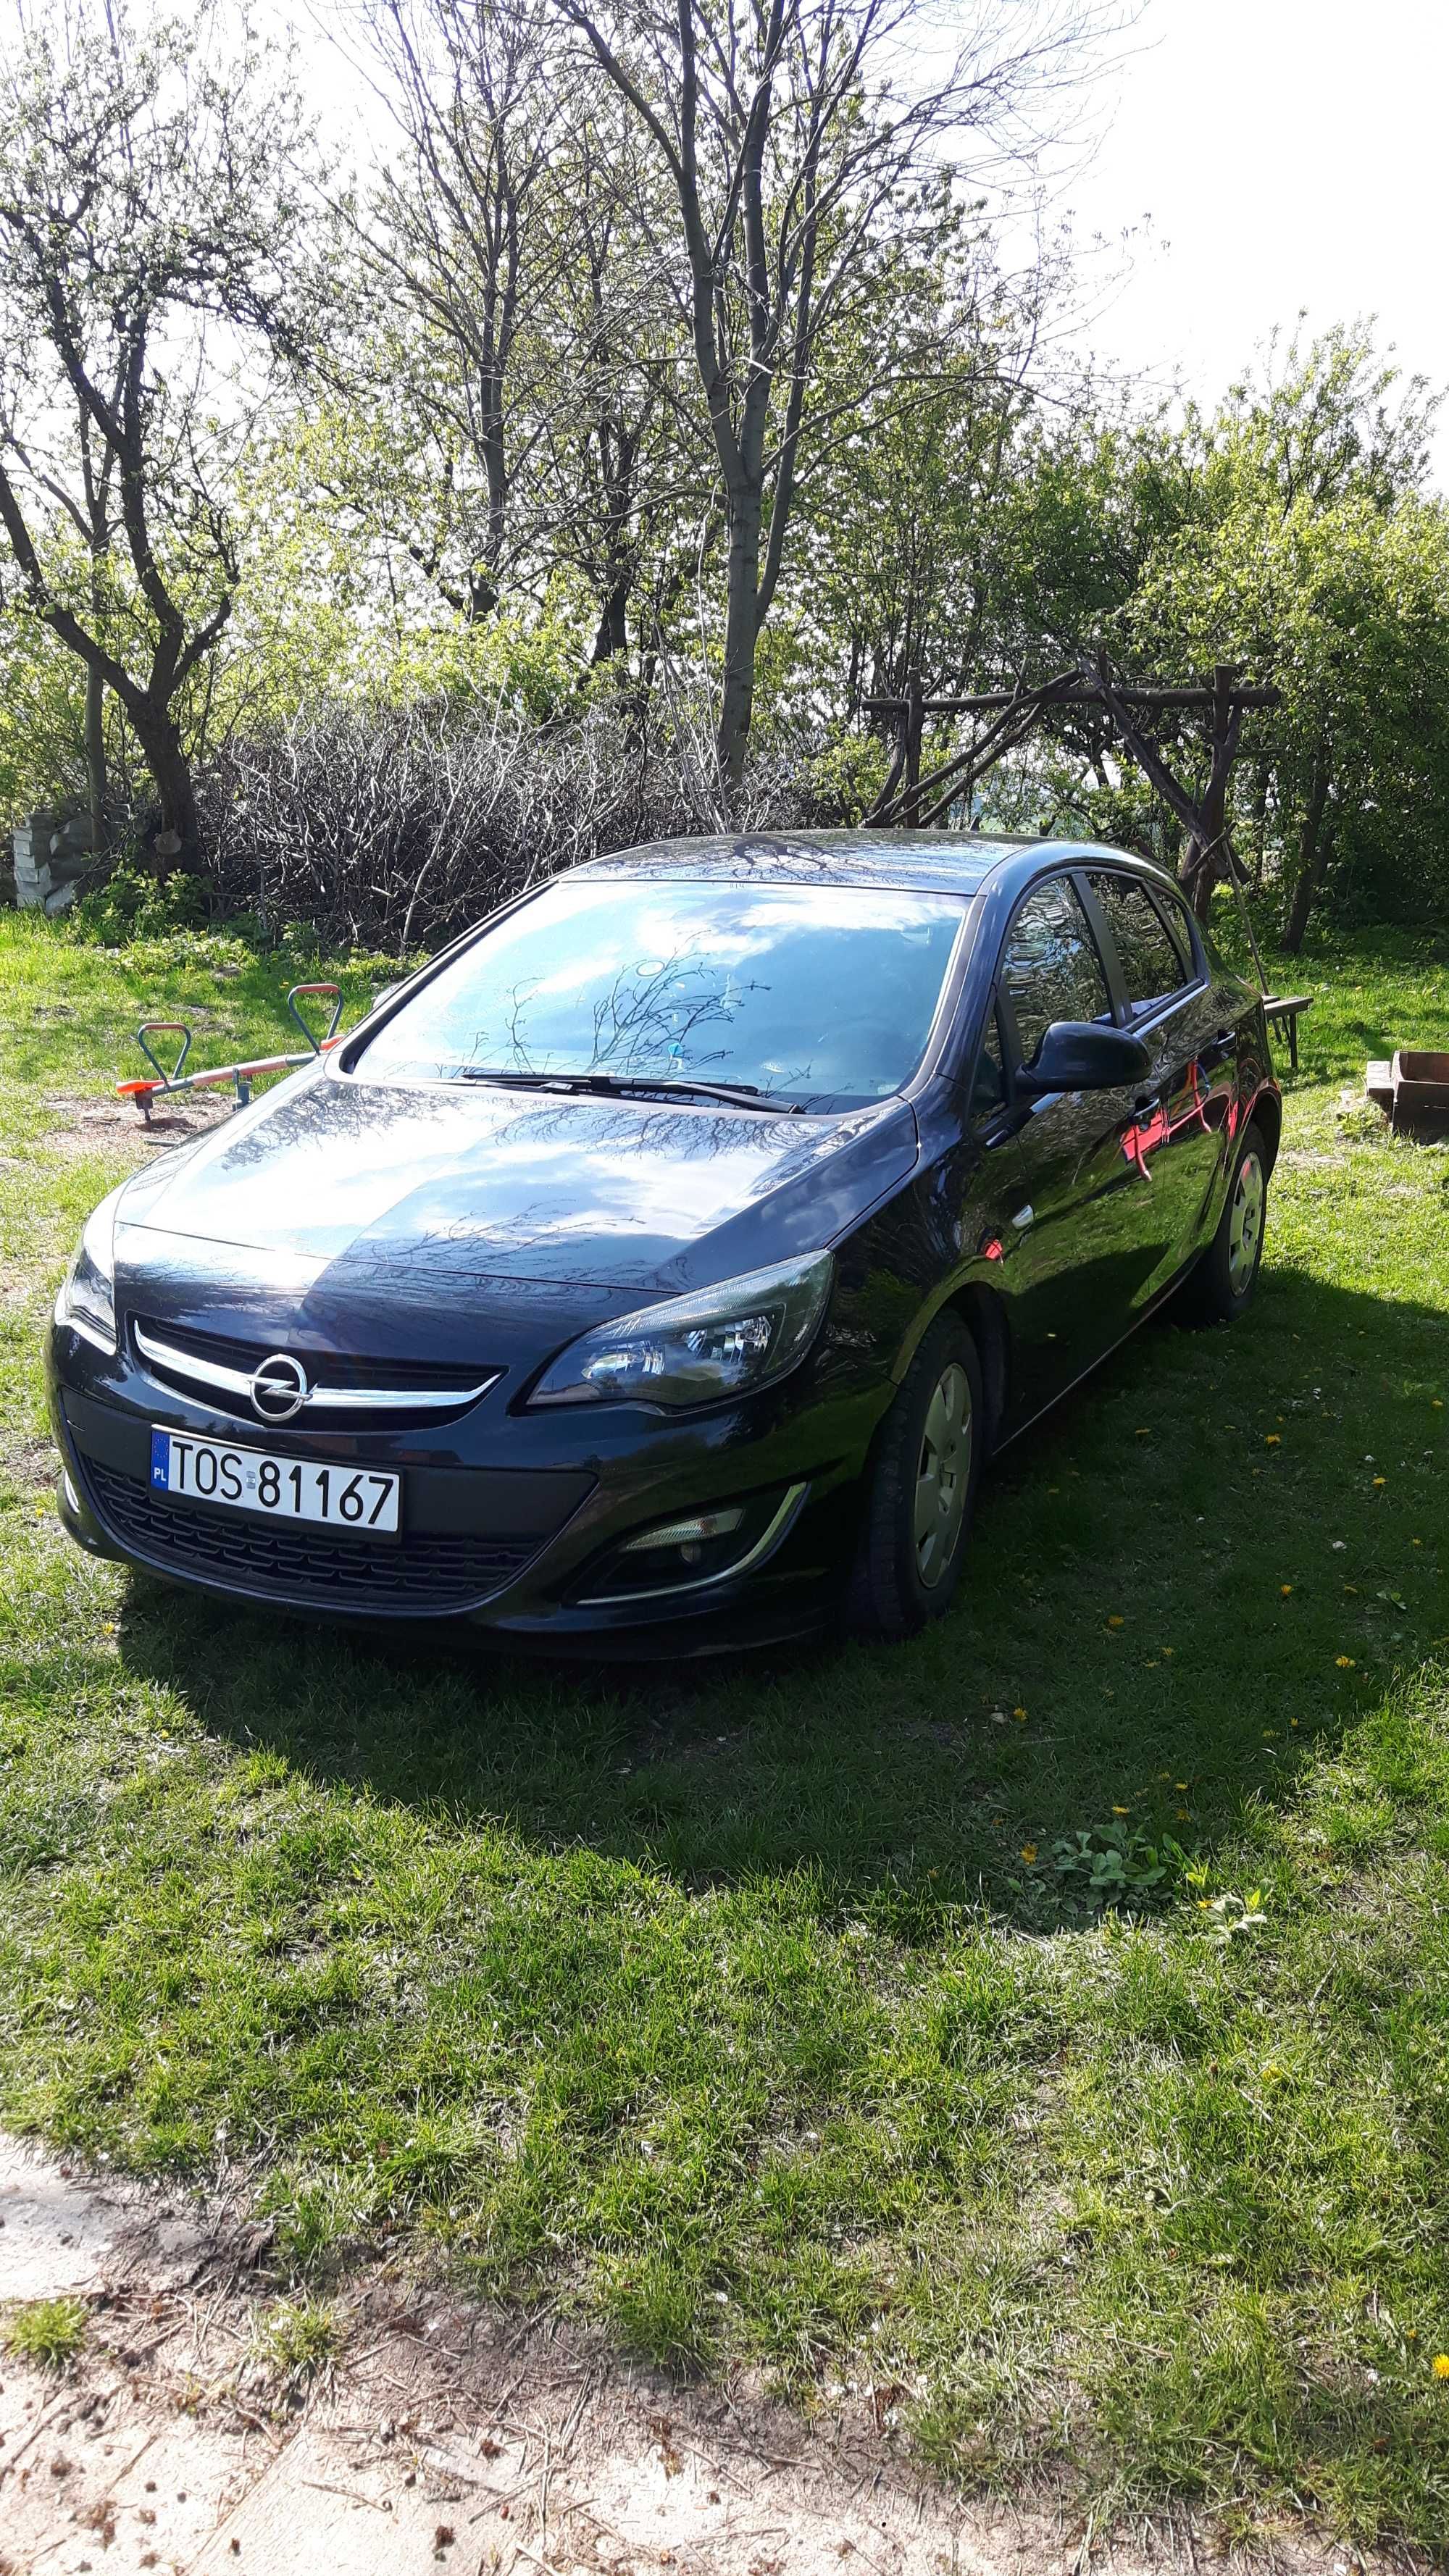 Opel Astra  2013